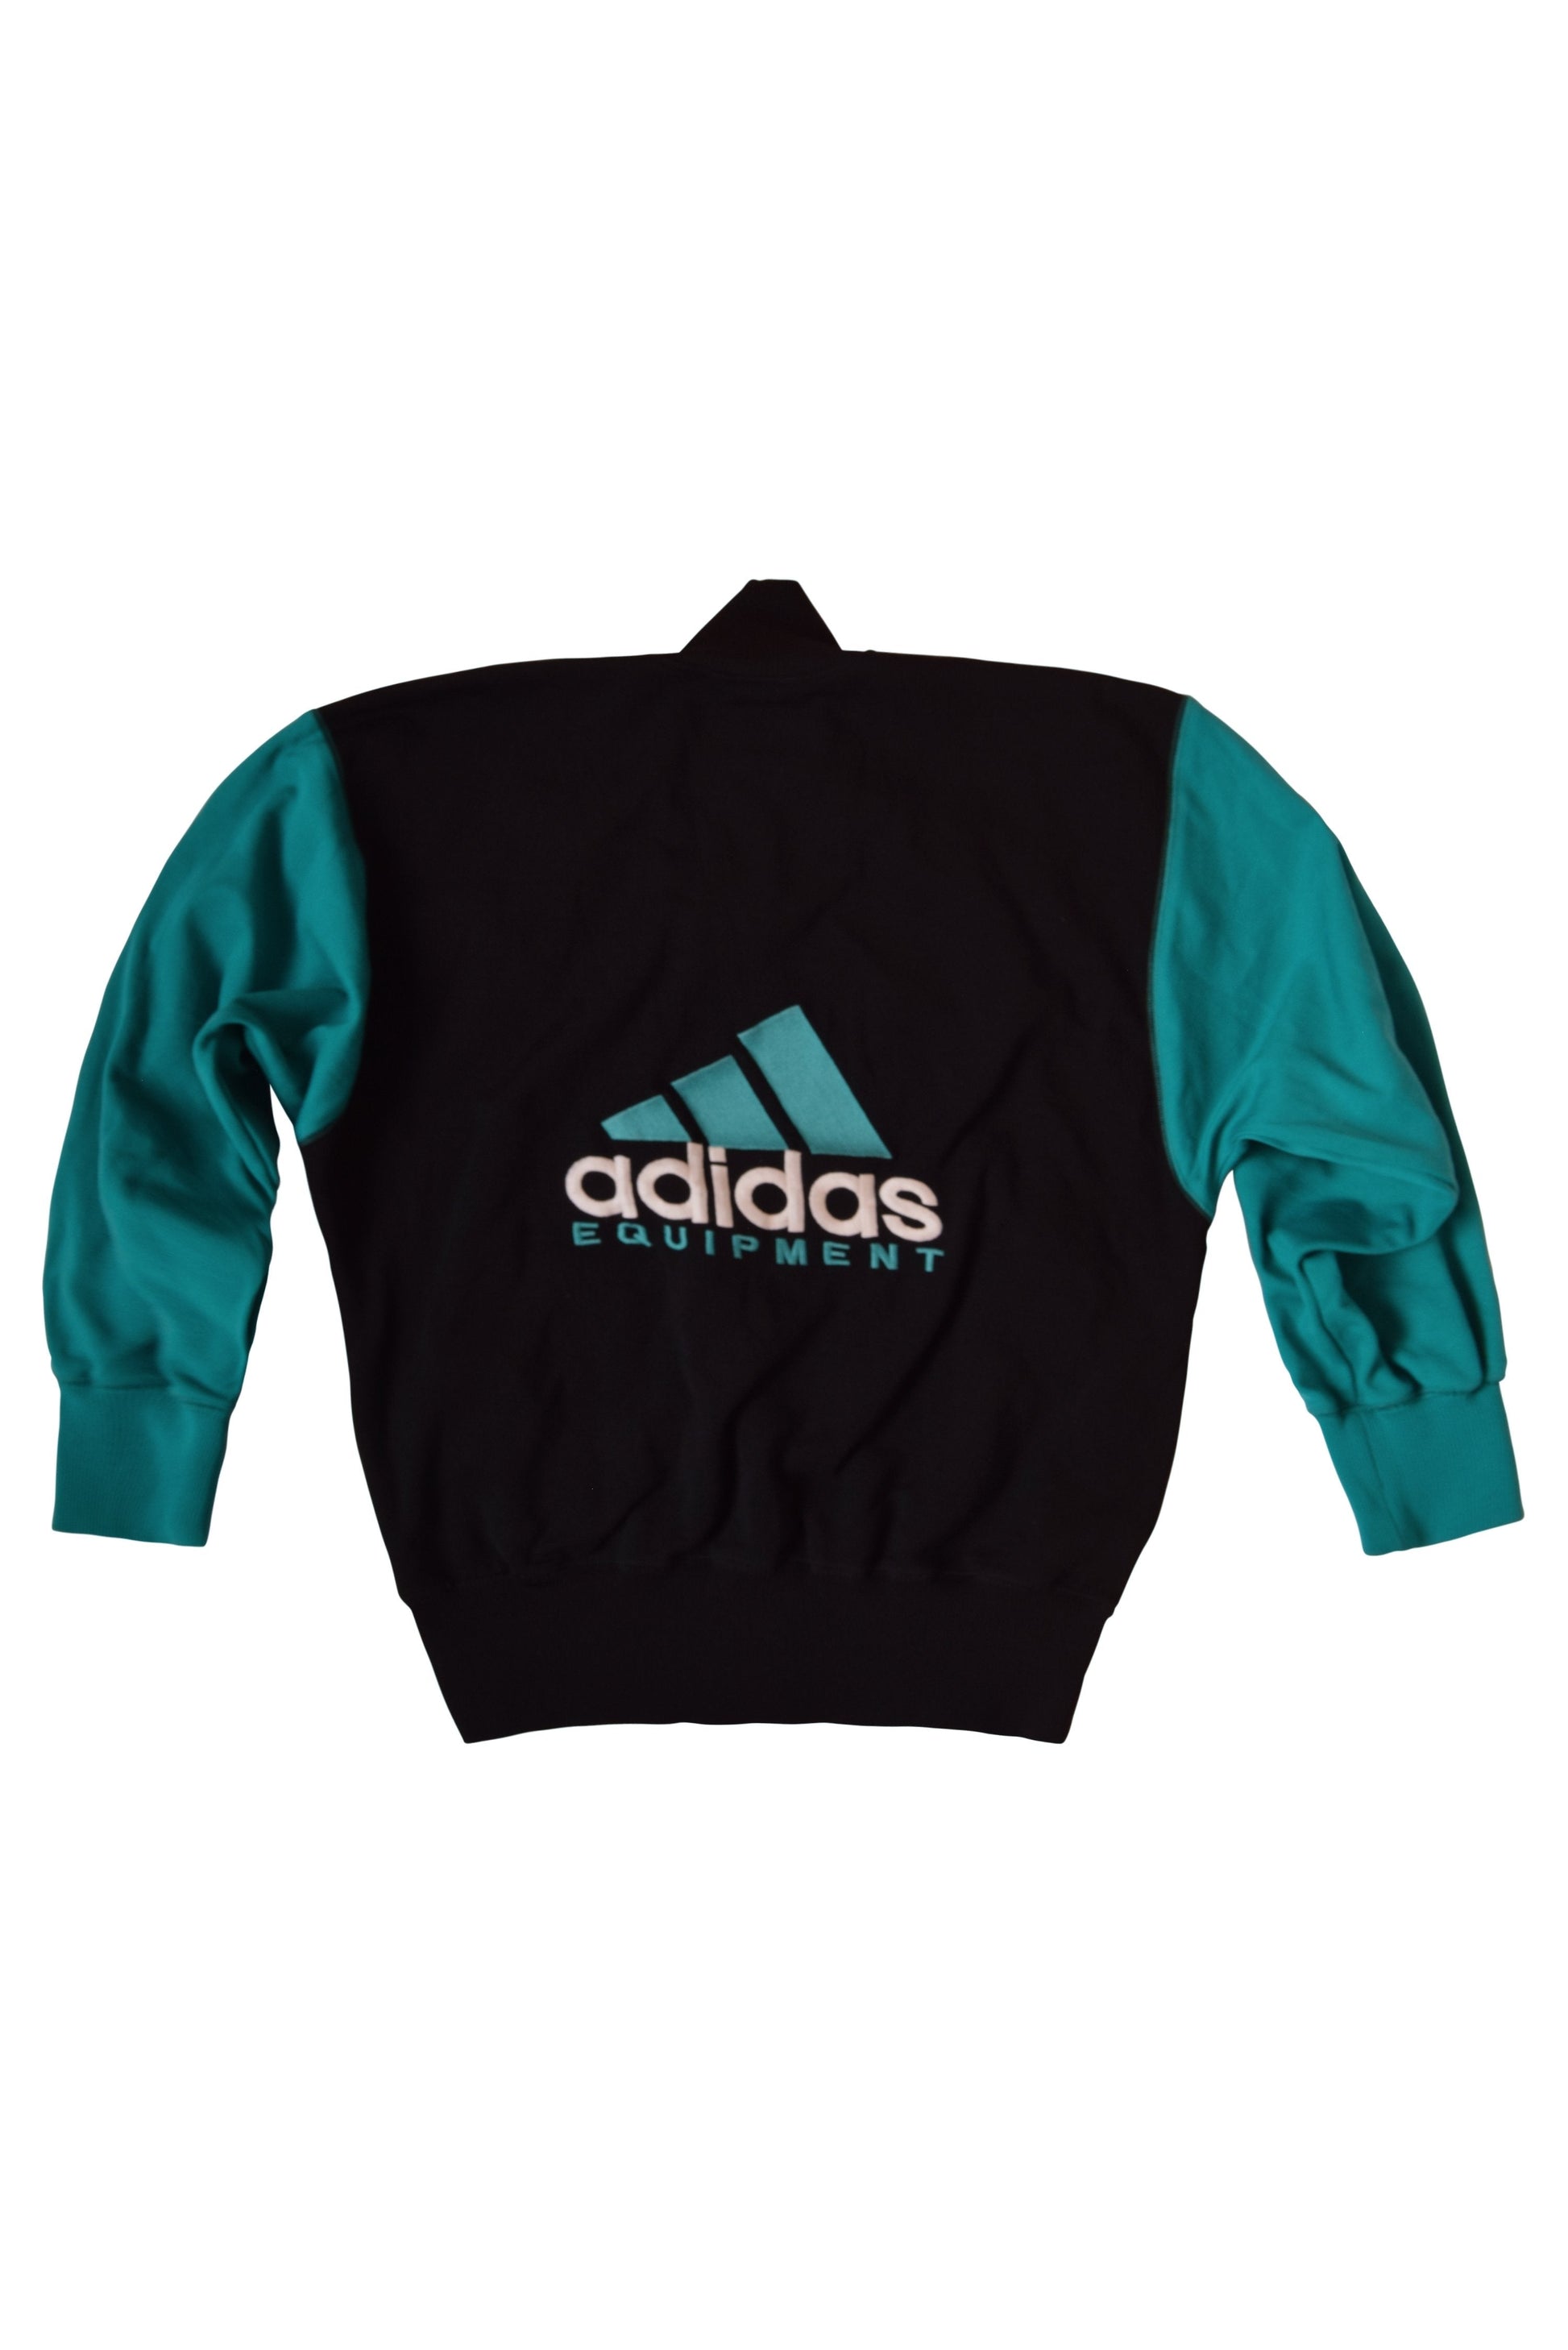 Vintage Adidas Equipment Sweatshirt Size L Green Black